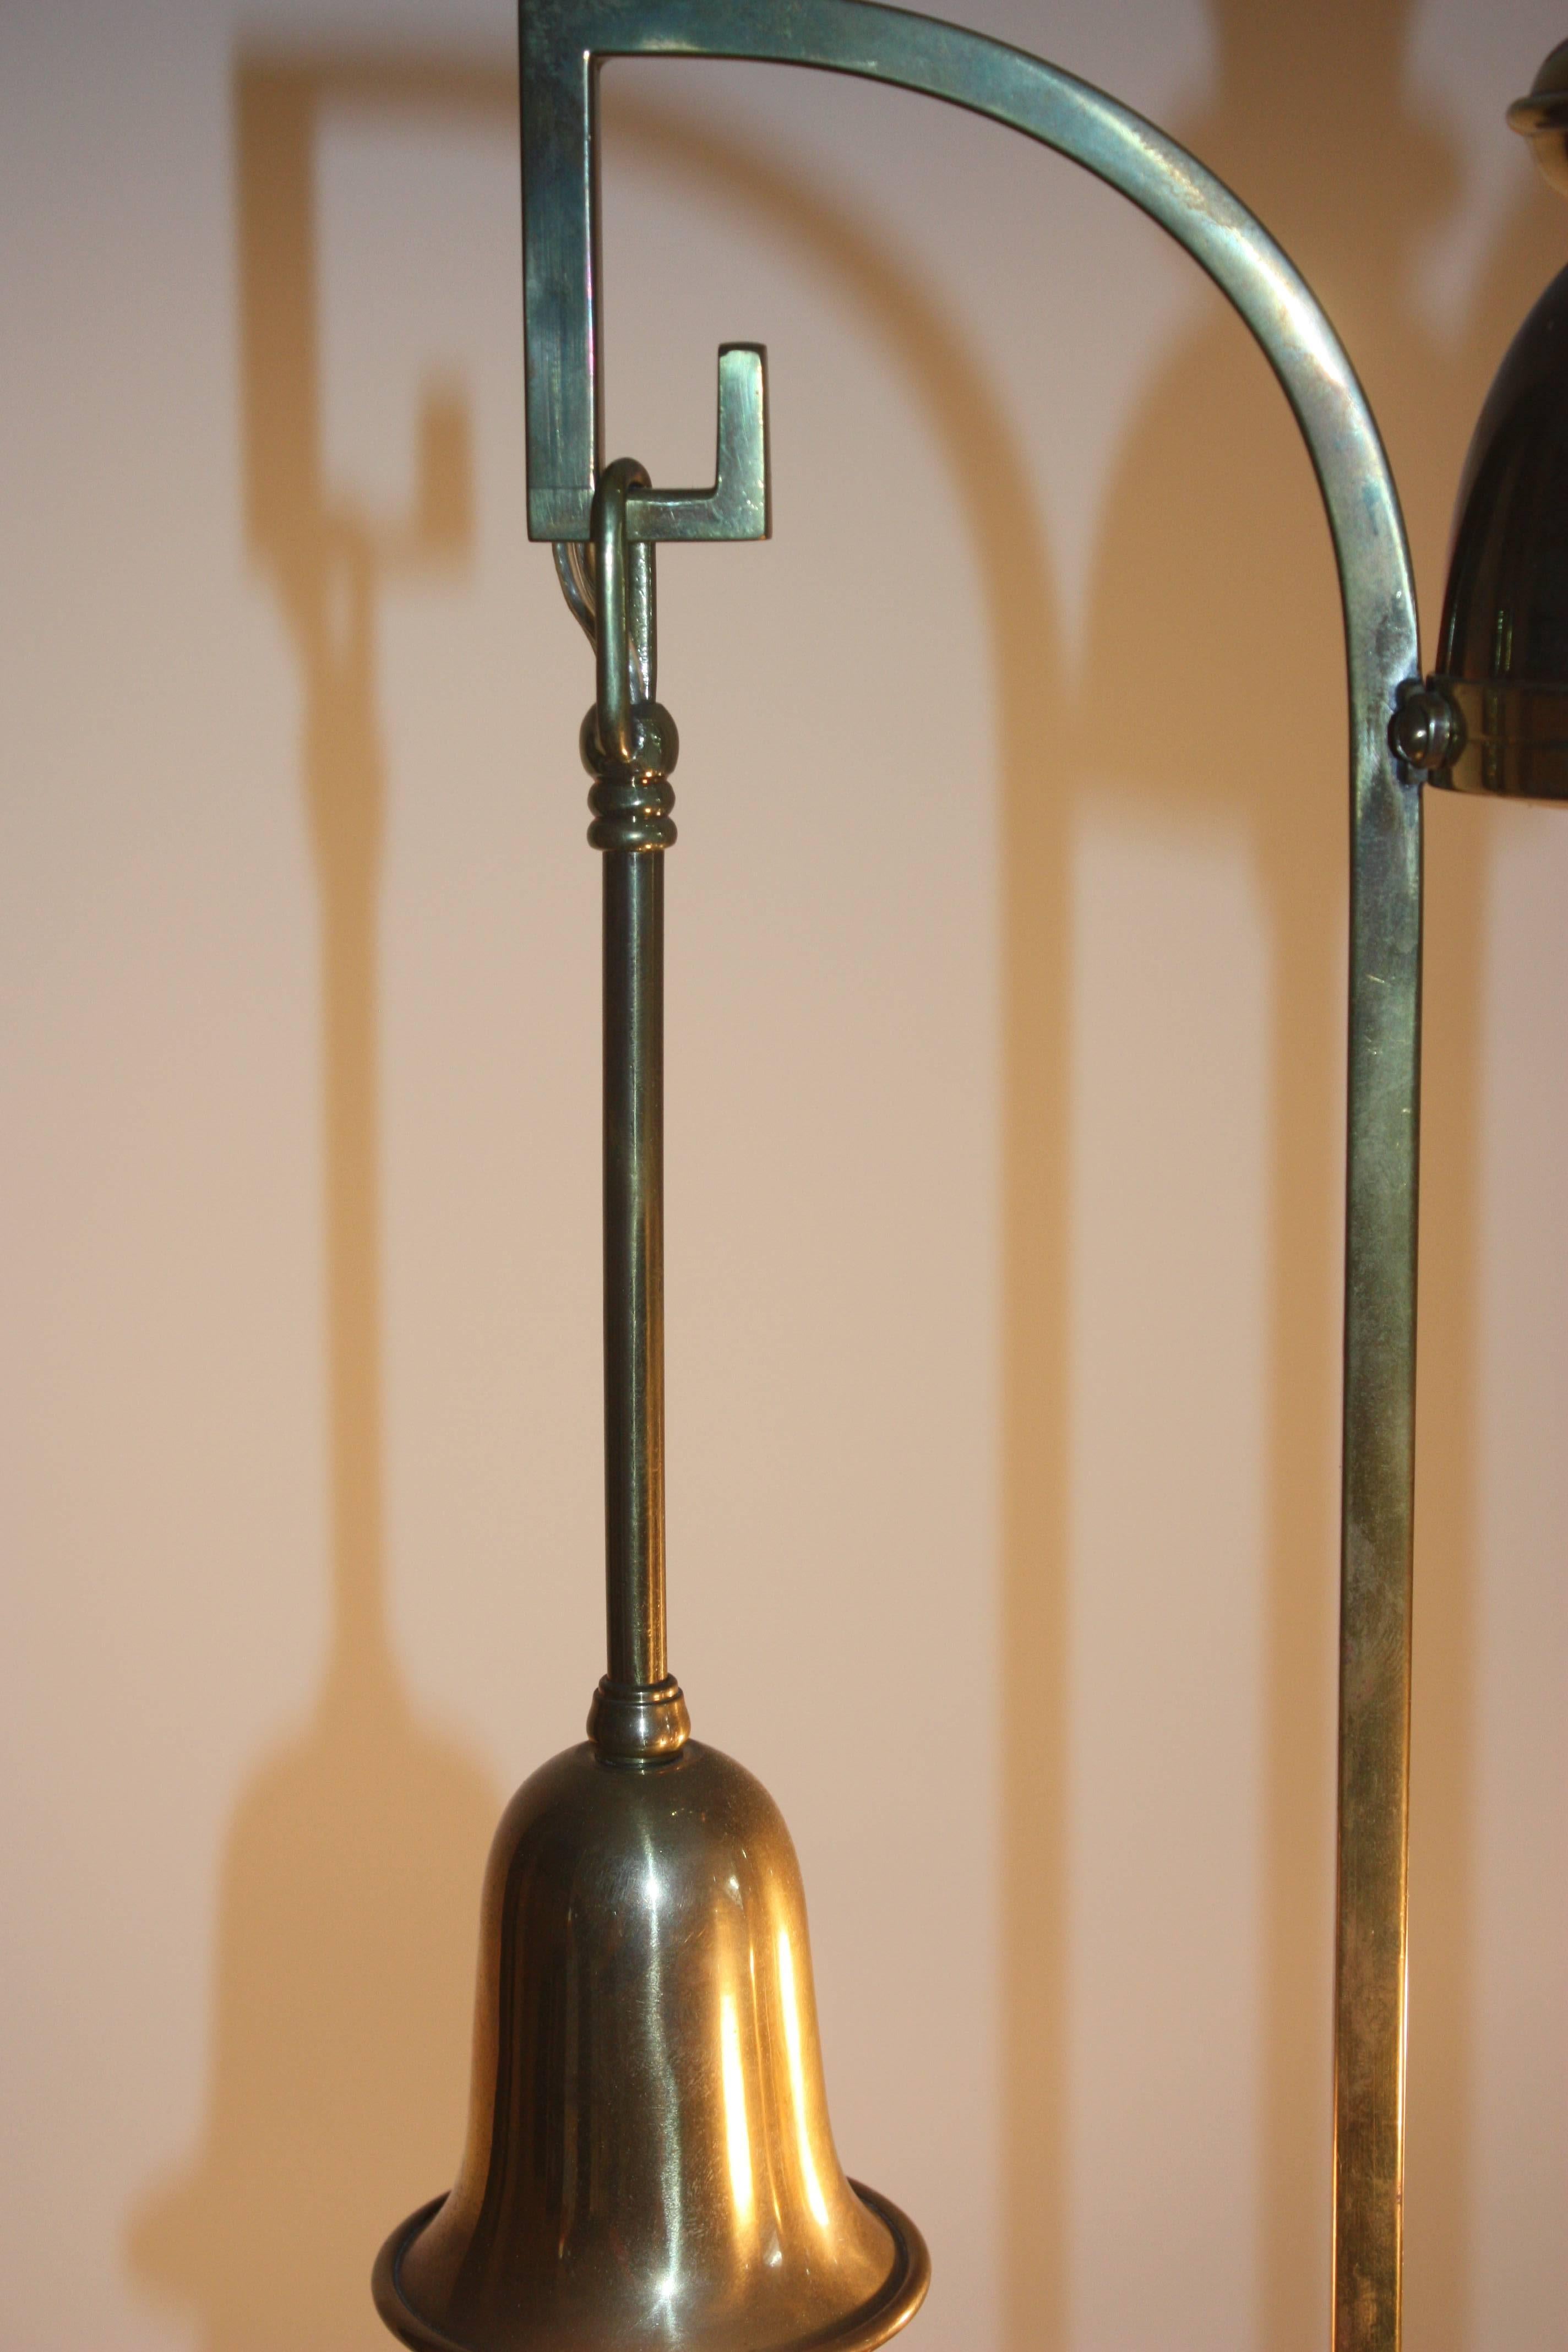 Art Nouveau Chandelier Brass and Crystal, circa 1900s (Frühes 20. Jahrhundert)